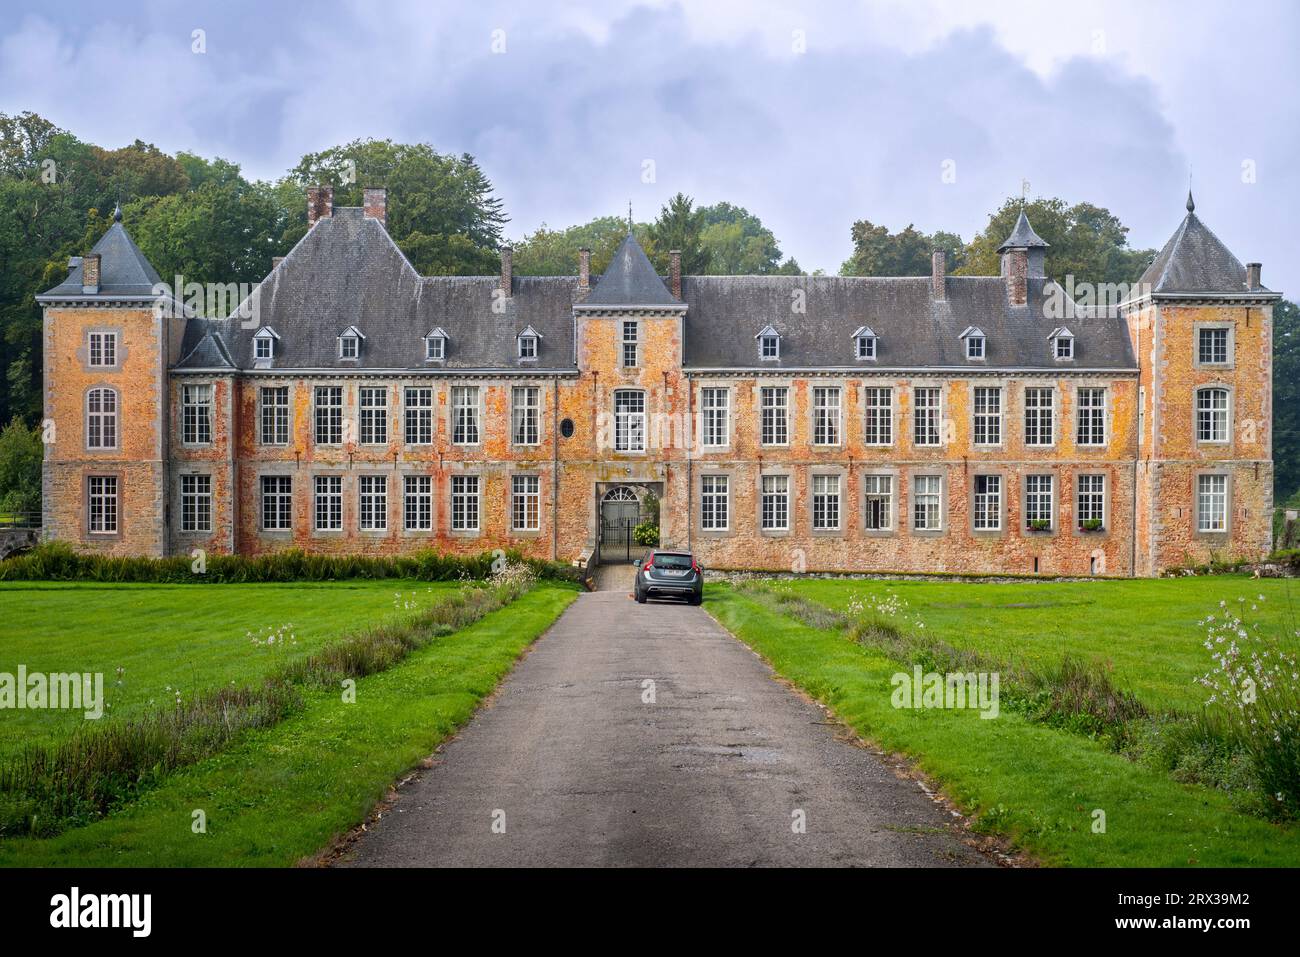 Château de Haltinne, 17th century moated castle near Gesves, province of Namur, Belgian Ardennes, Wallonia, Belgium Stock Photo